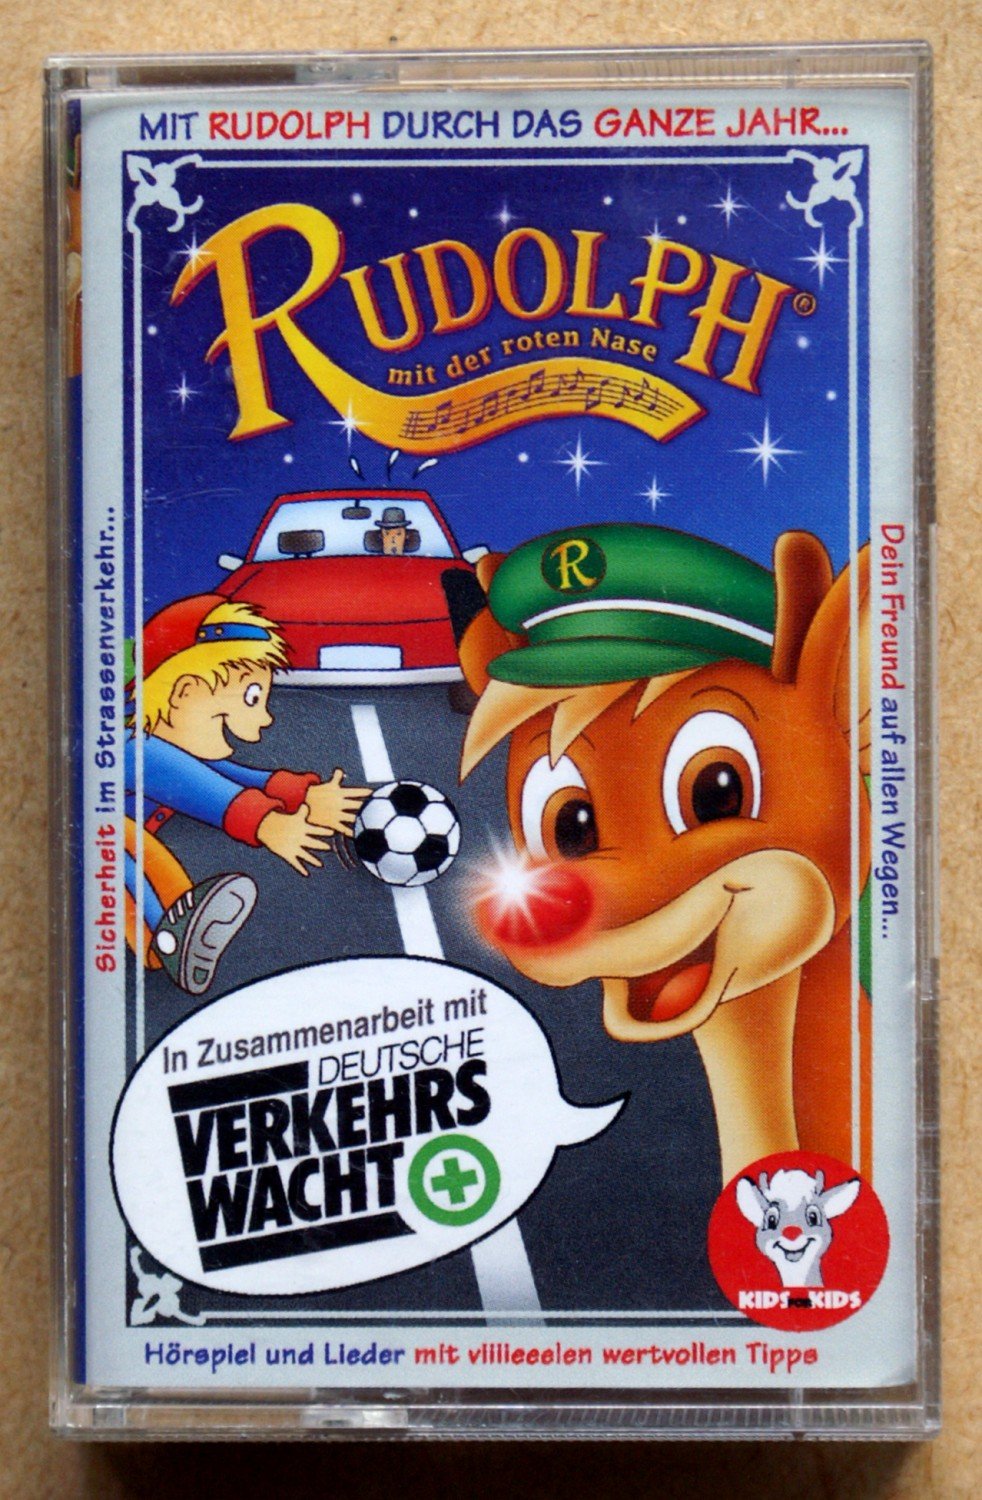 https://images.booklooker.de/x/010pym/Rudolph-mit-der-roten-Nase.jpg